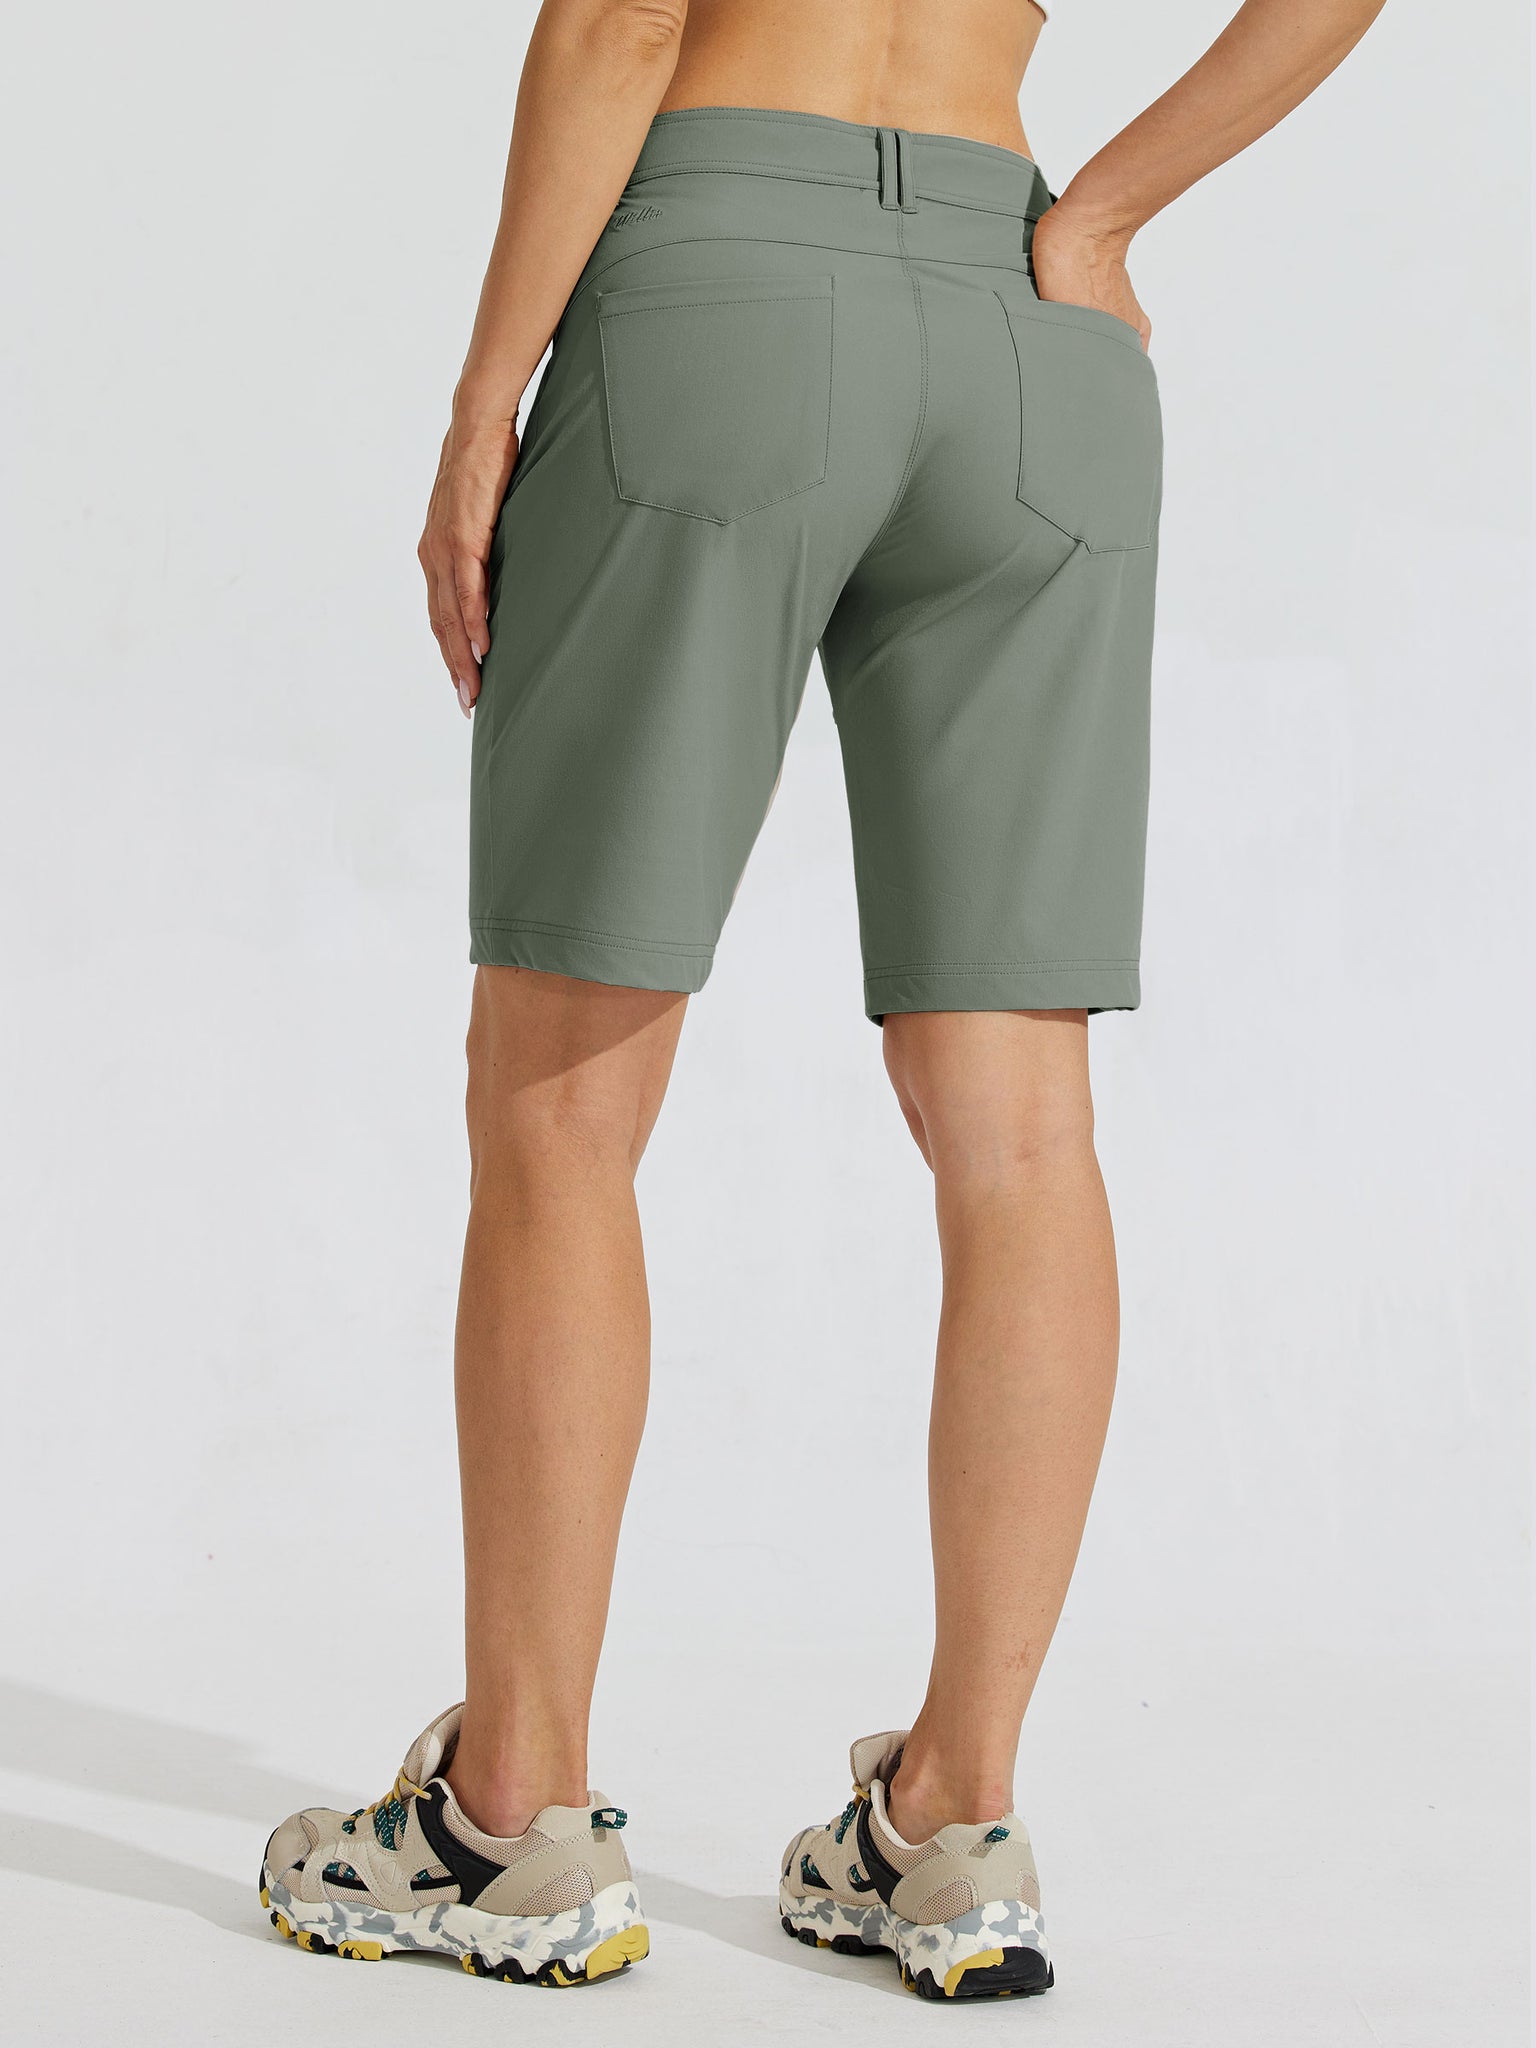 Women's Slim Leg Golf Shorts 10Inch_Green_model3